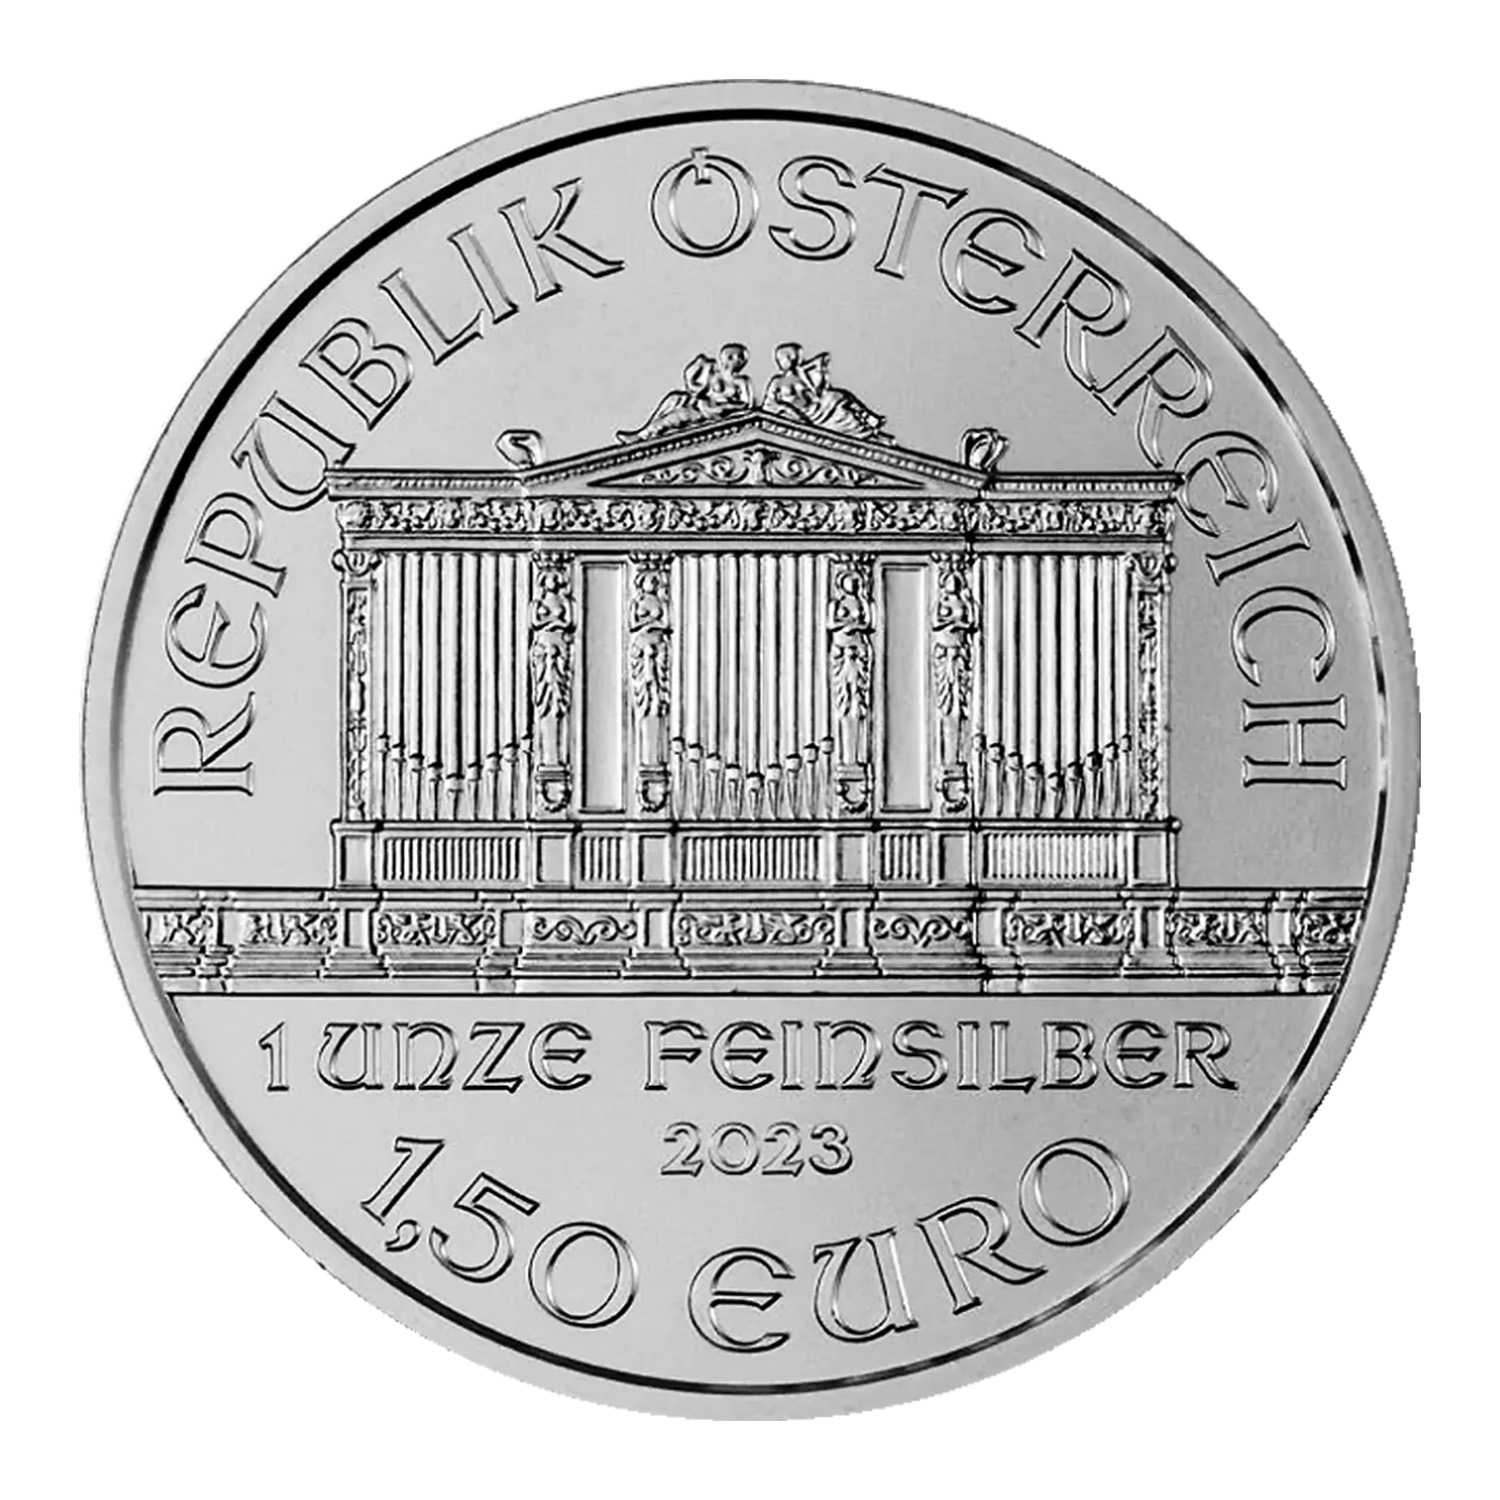 1oz silver coin Vienna Philharmonic 2023 reverse